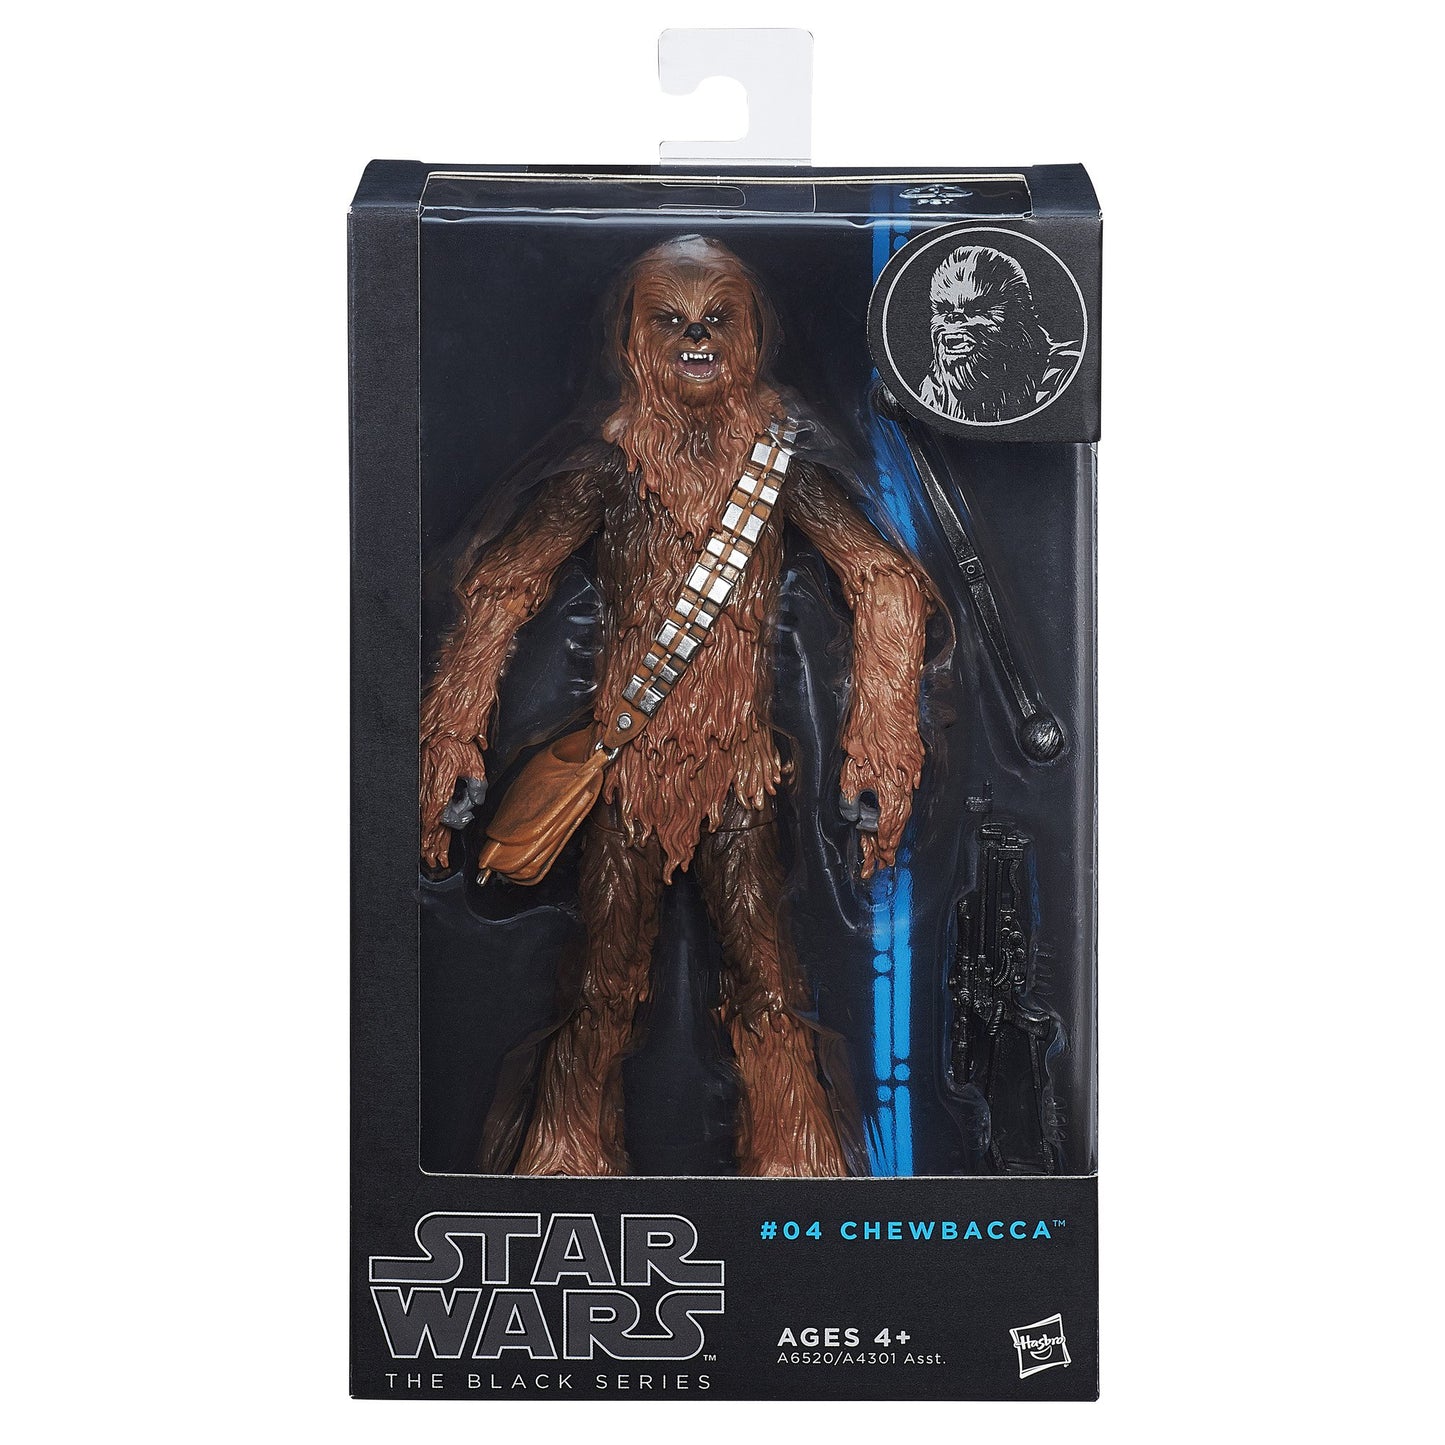 Star Wars - Chewbacca #04 - Black Series Action Figure